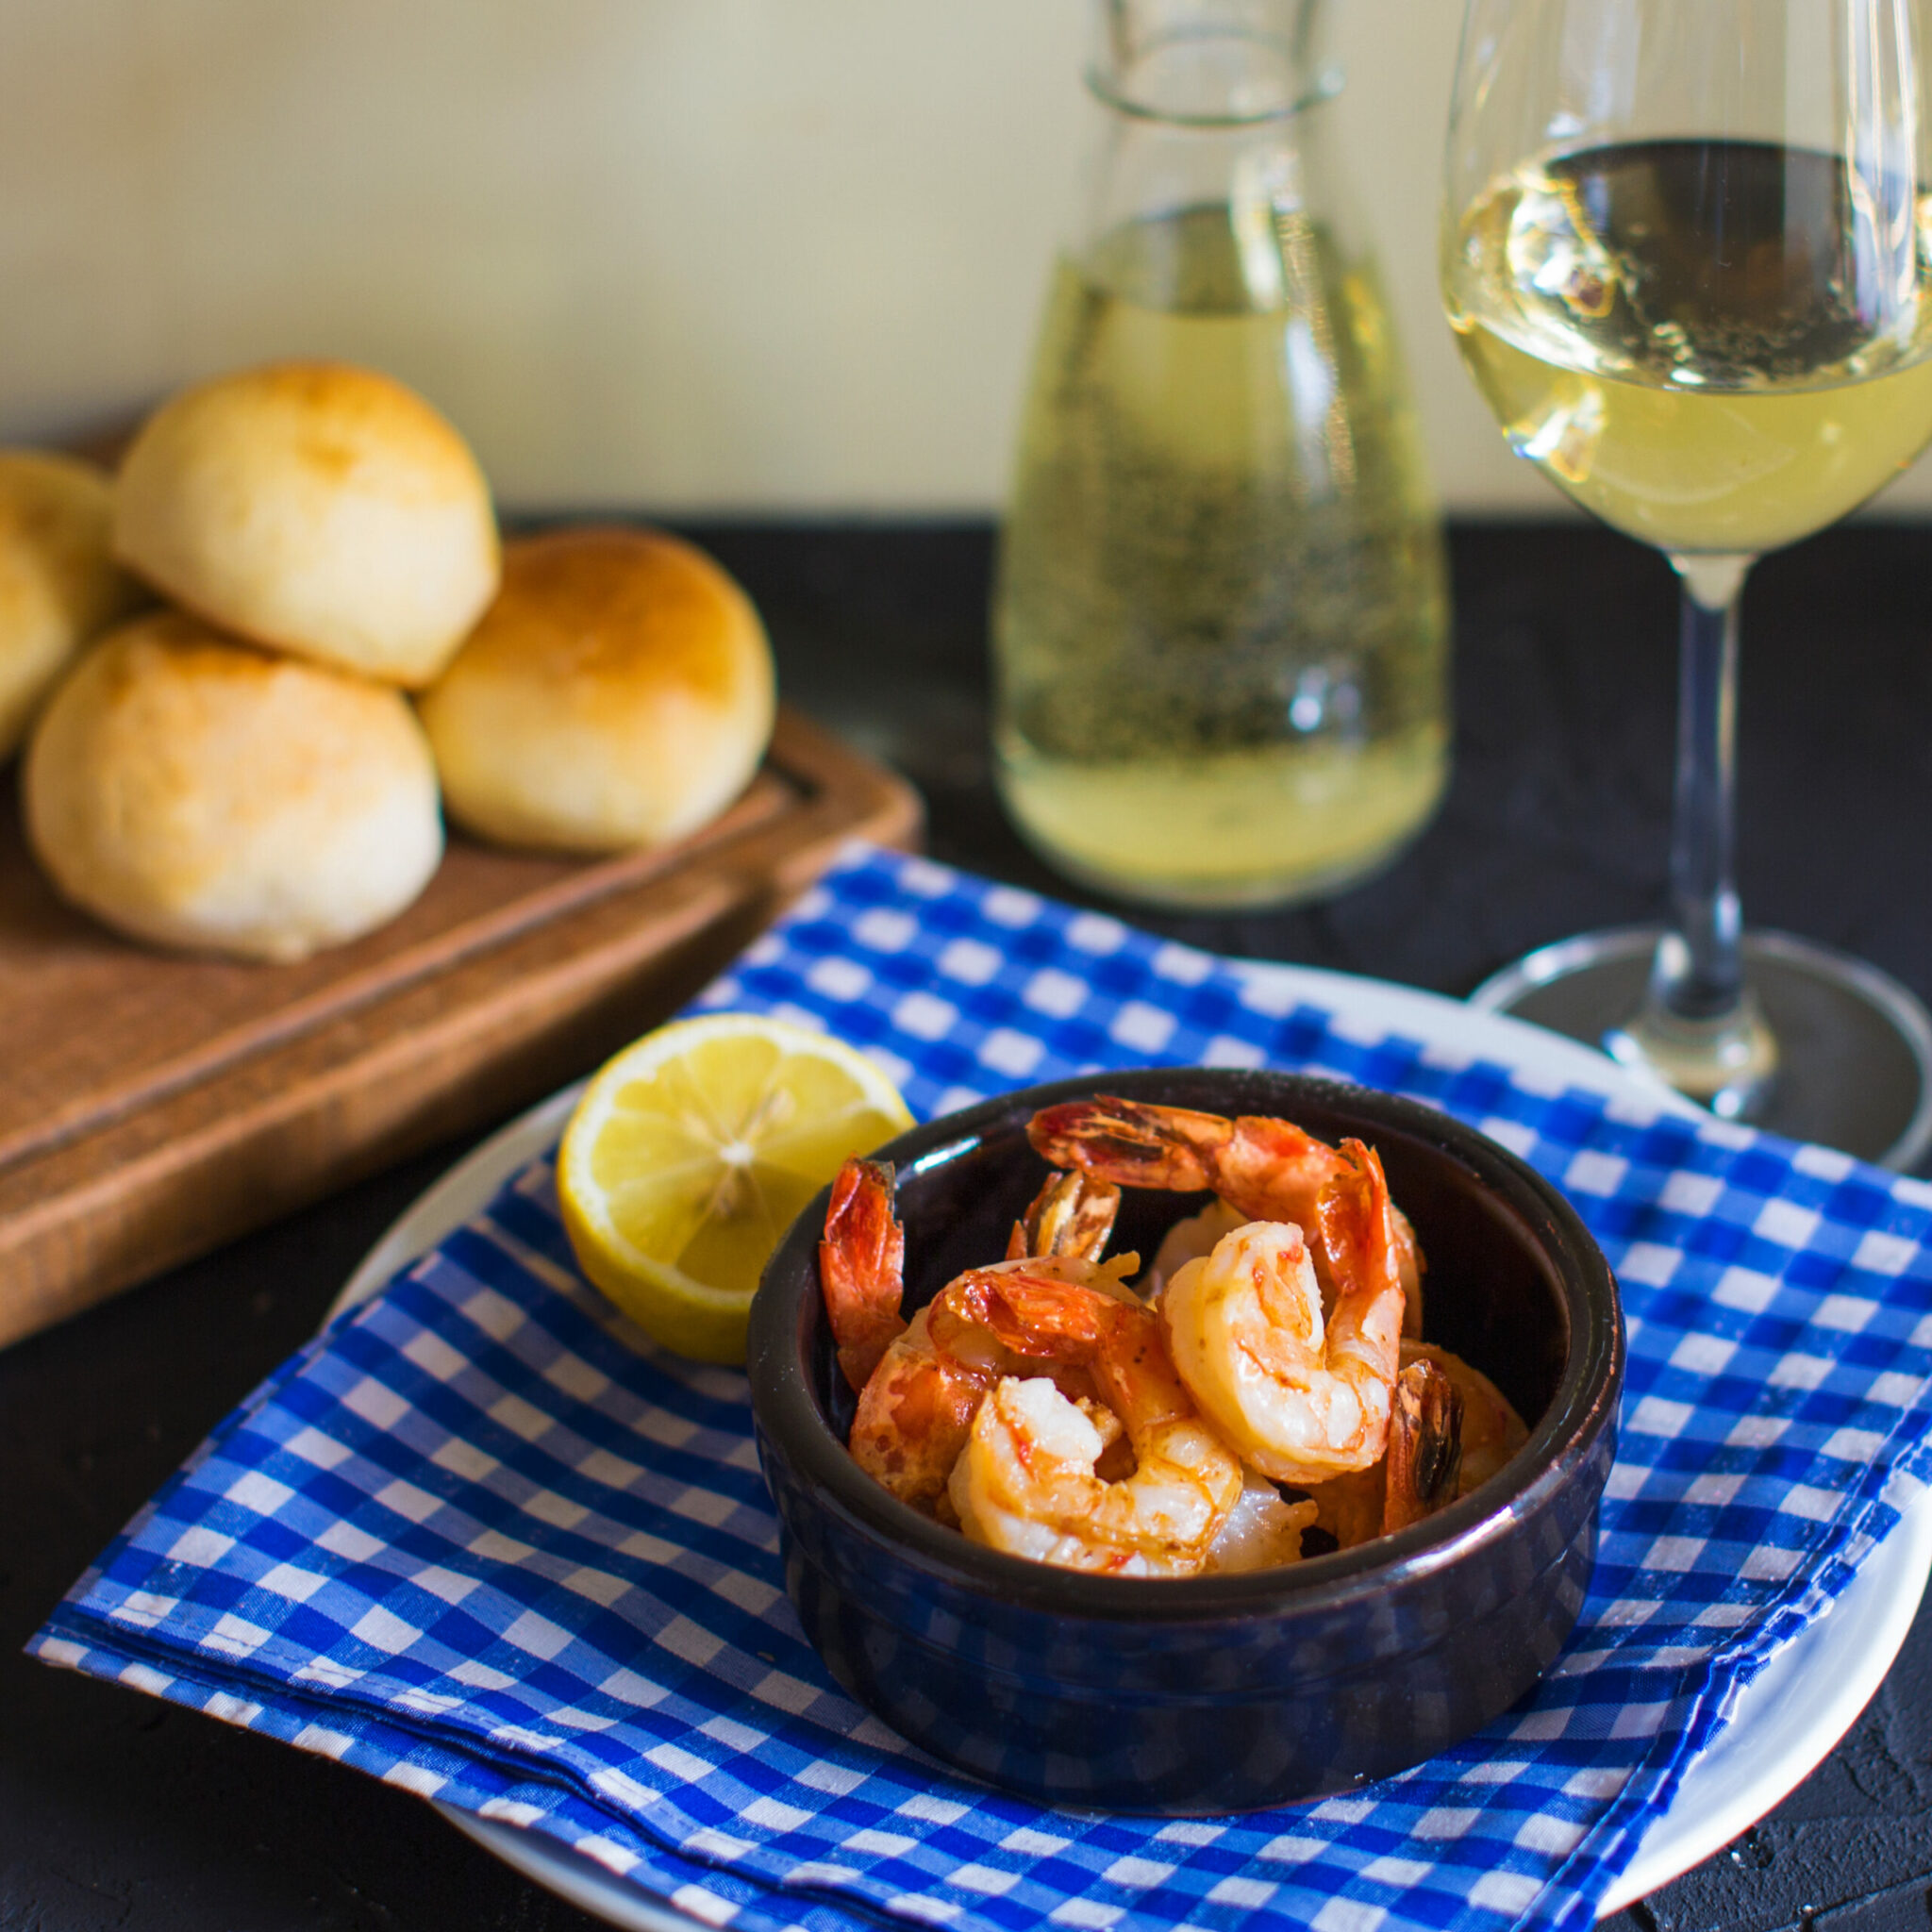 Substitutes for White Wine in Shrimp Scampi